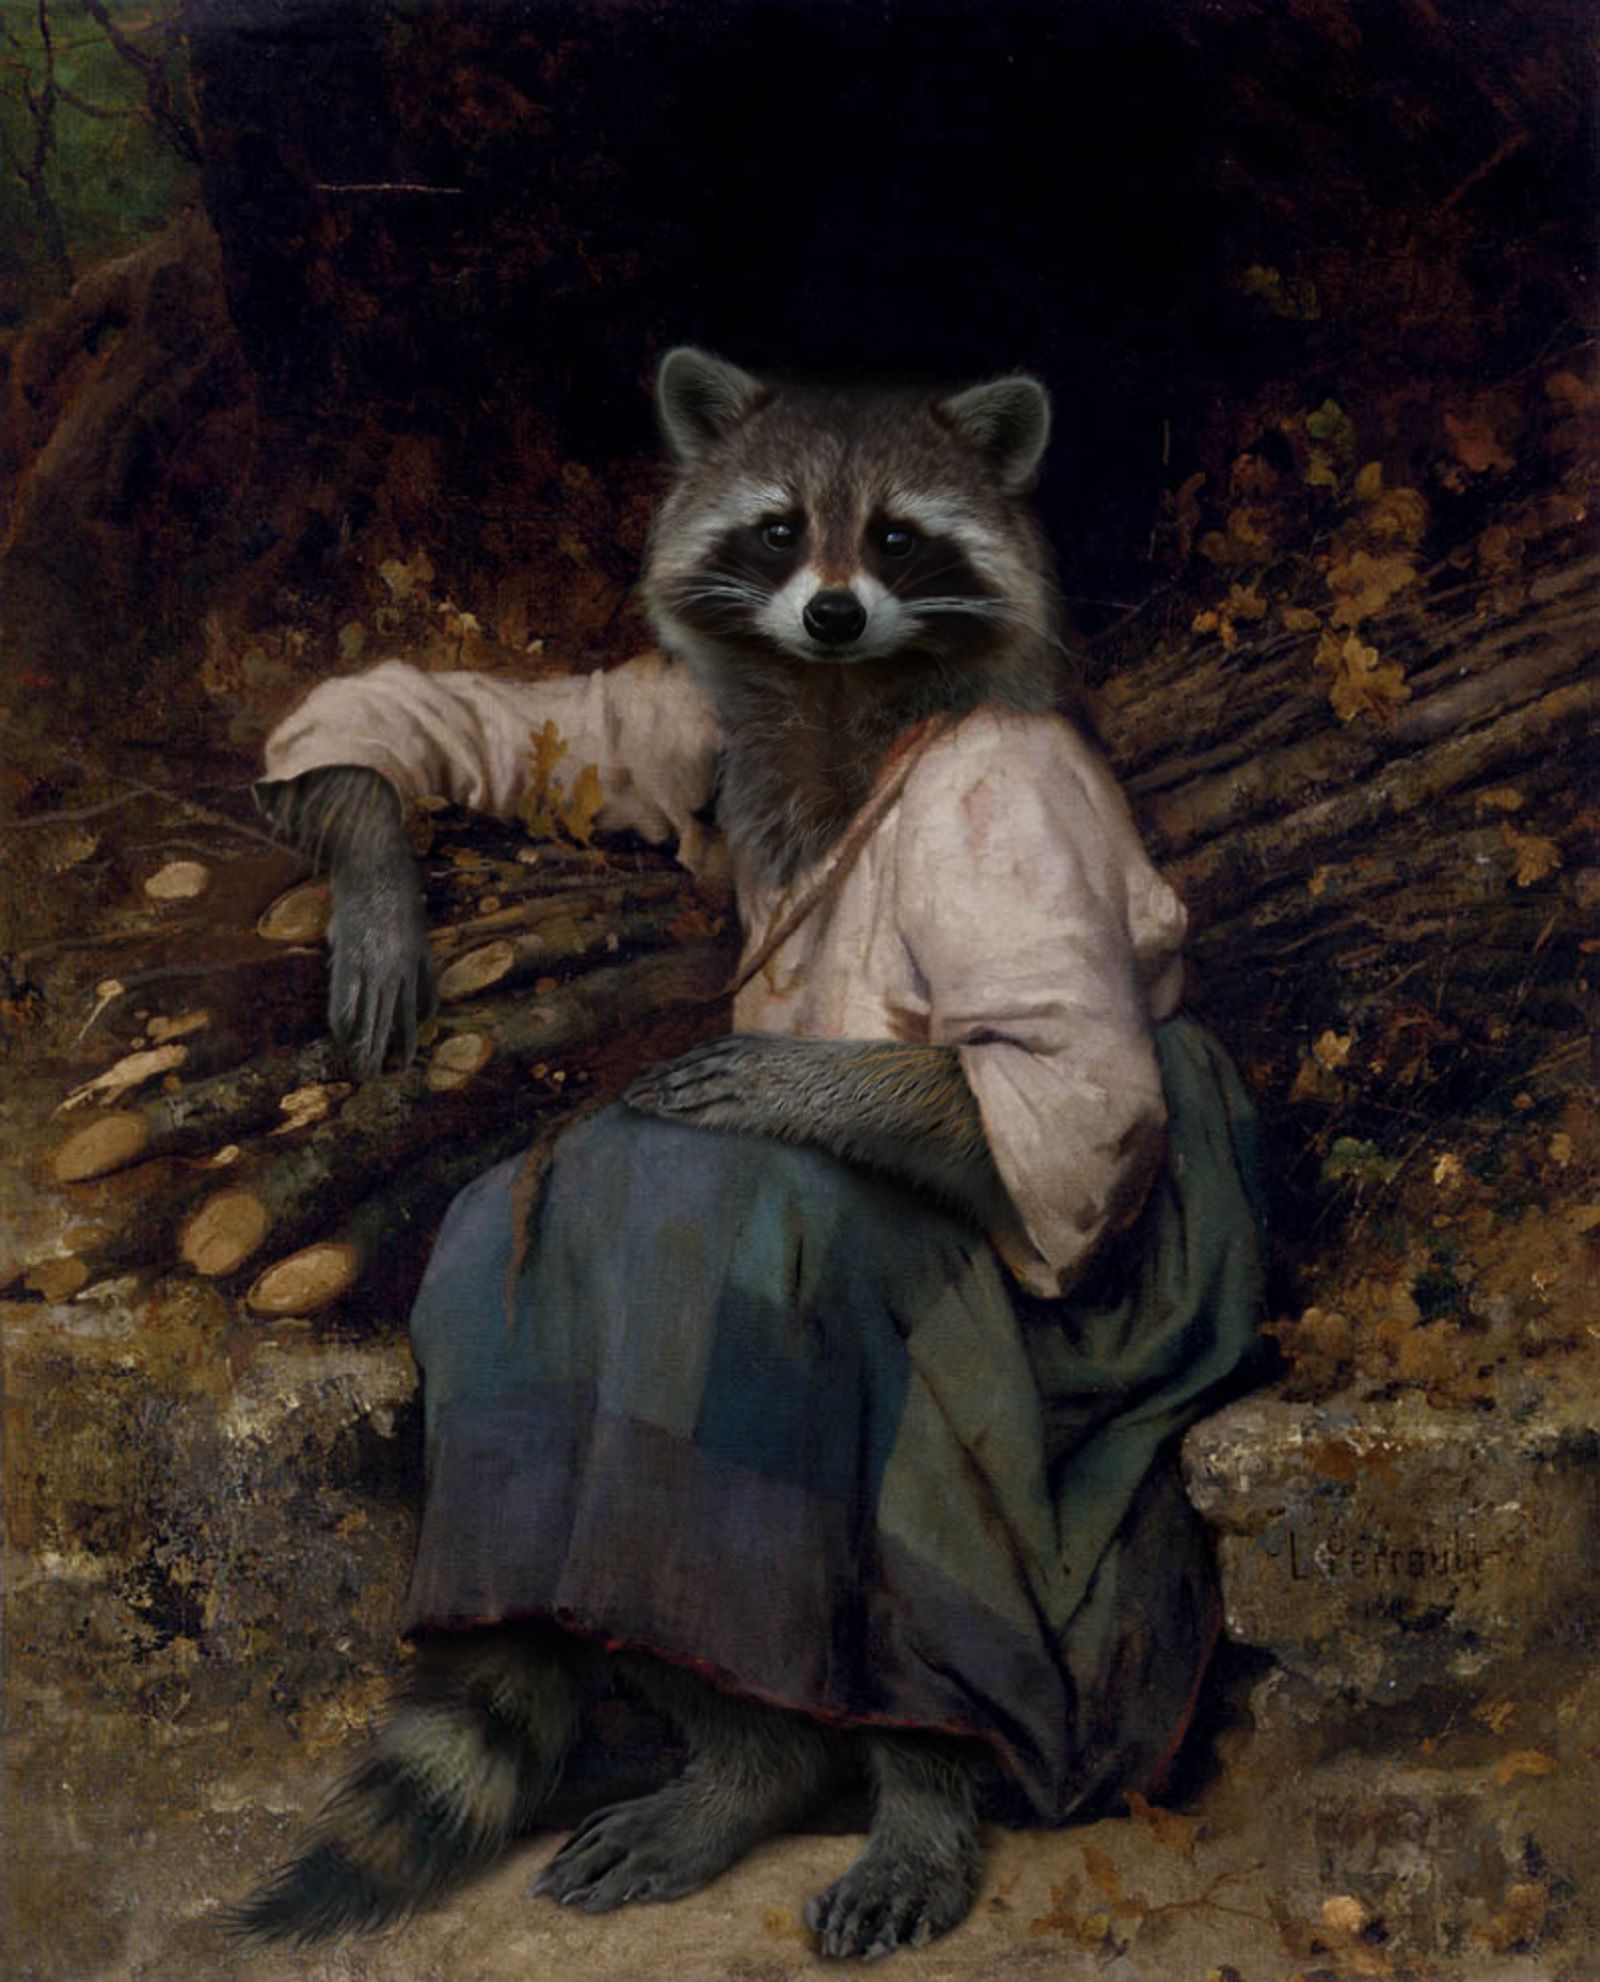 Amusing Images Of Animals Photoshopped Into Renaissance Paintings image 17